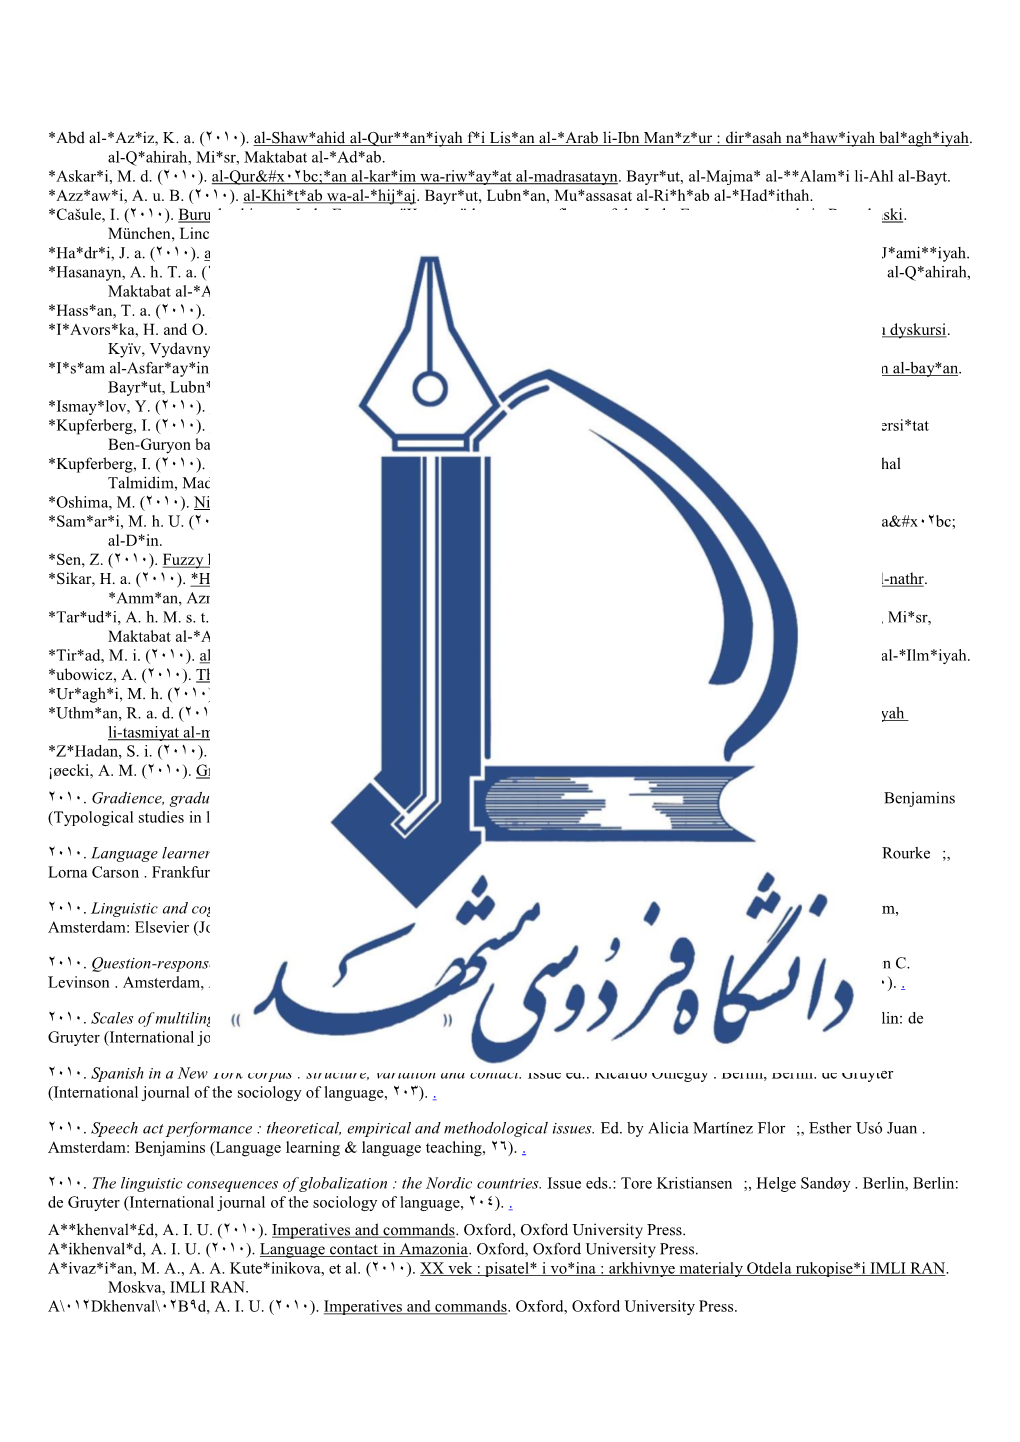 (٢٠١٠). Al-Shaw*Ahid Al-Qur**An*Iyah F*I Lis*An Al-*Arab Li-Ibn Man*Z*Ur